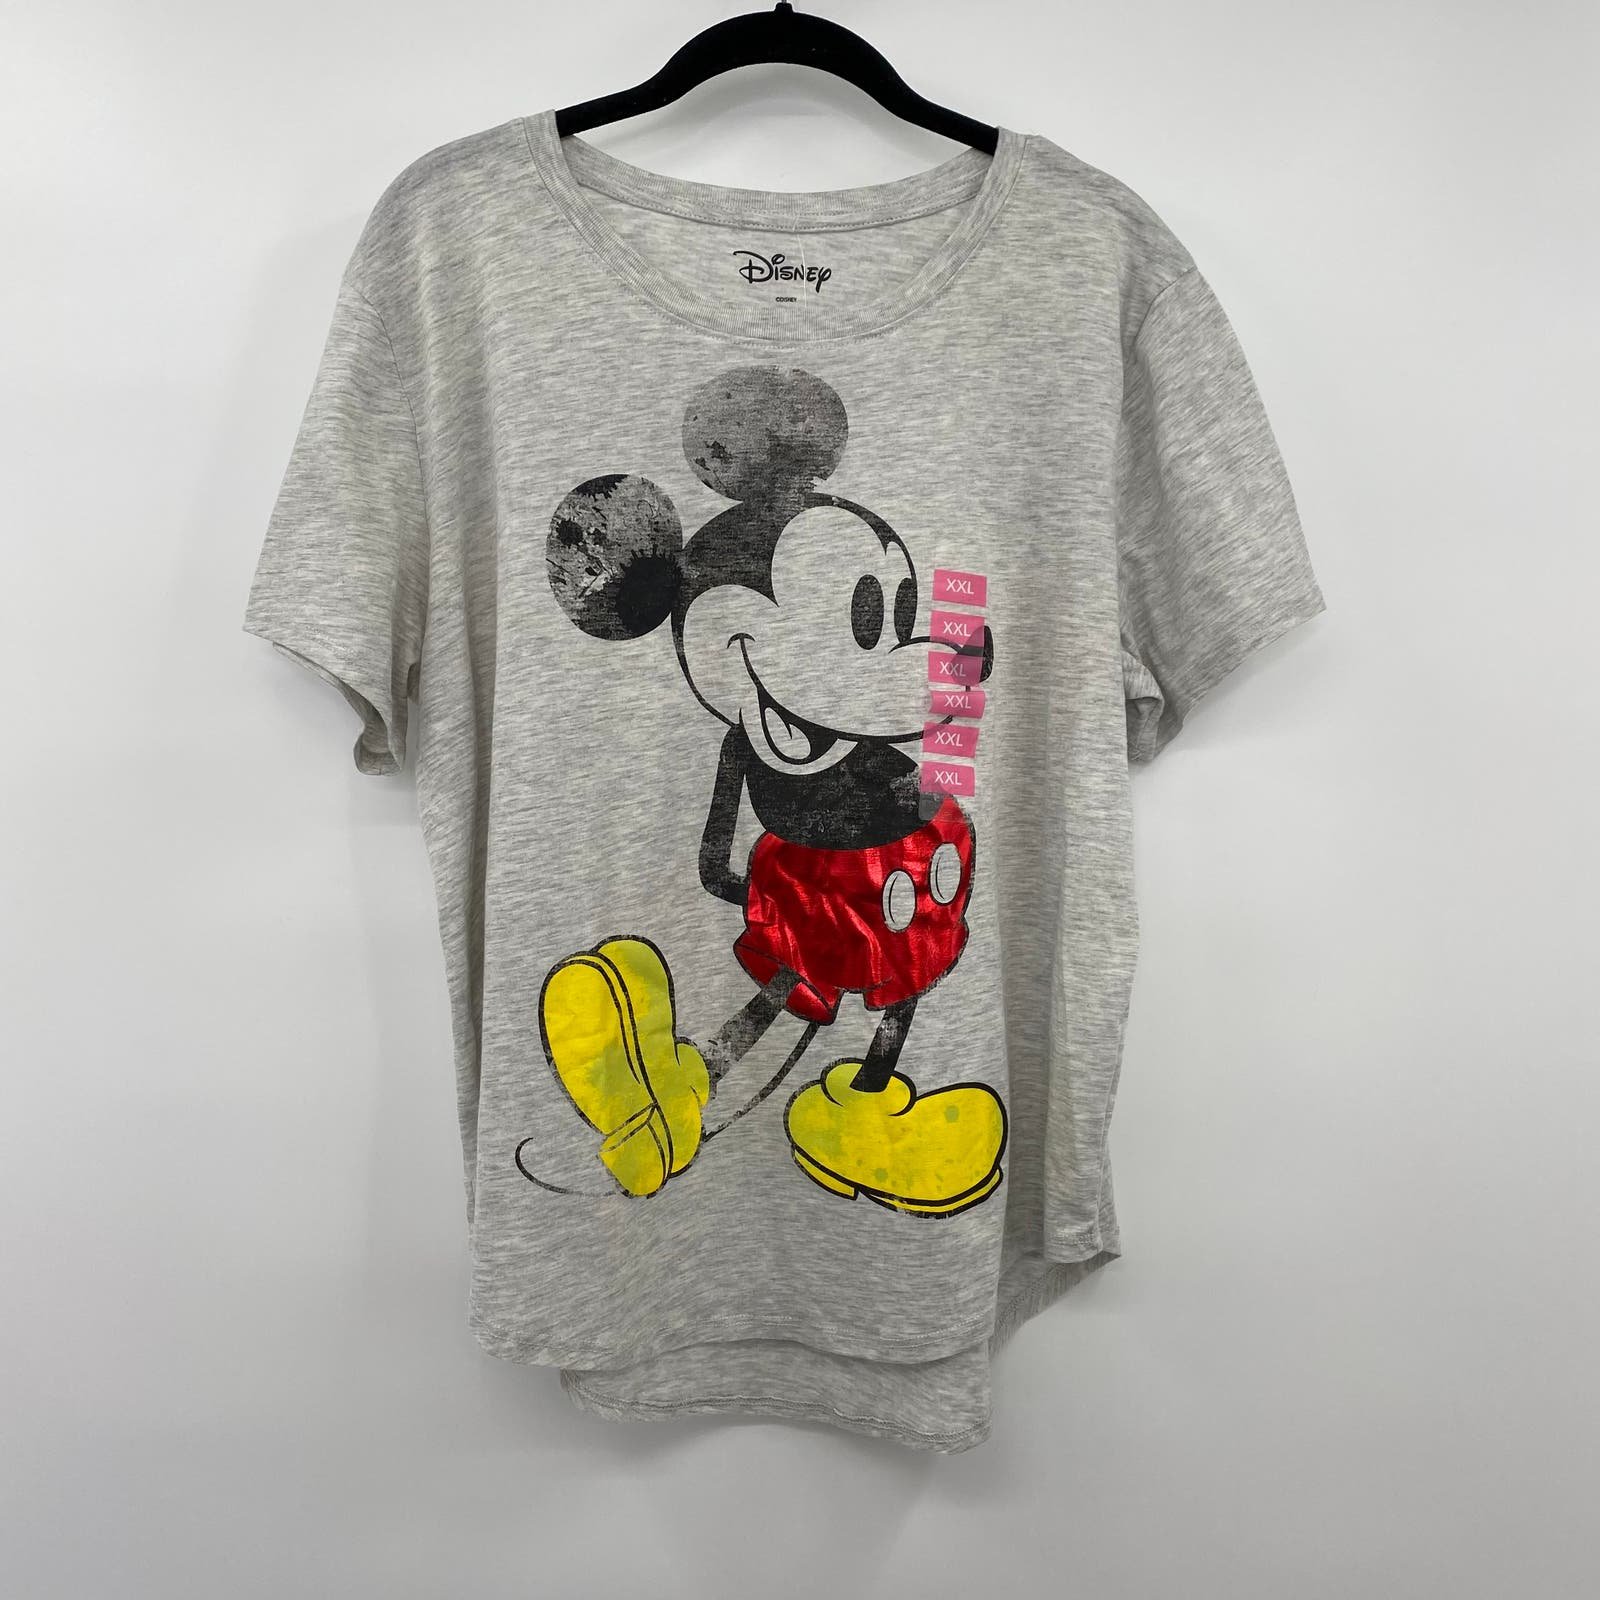 Wholesale price Disney Mickey Mouse T Shirt Short Sleev